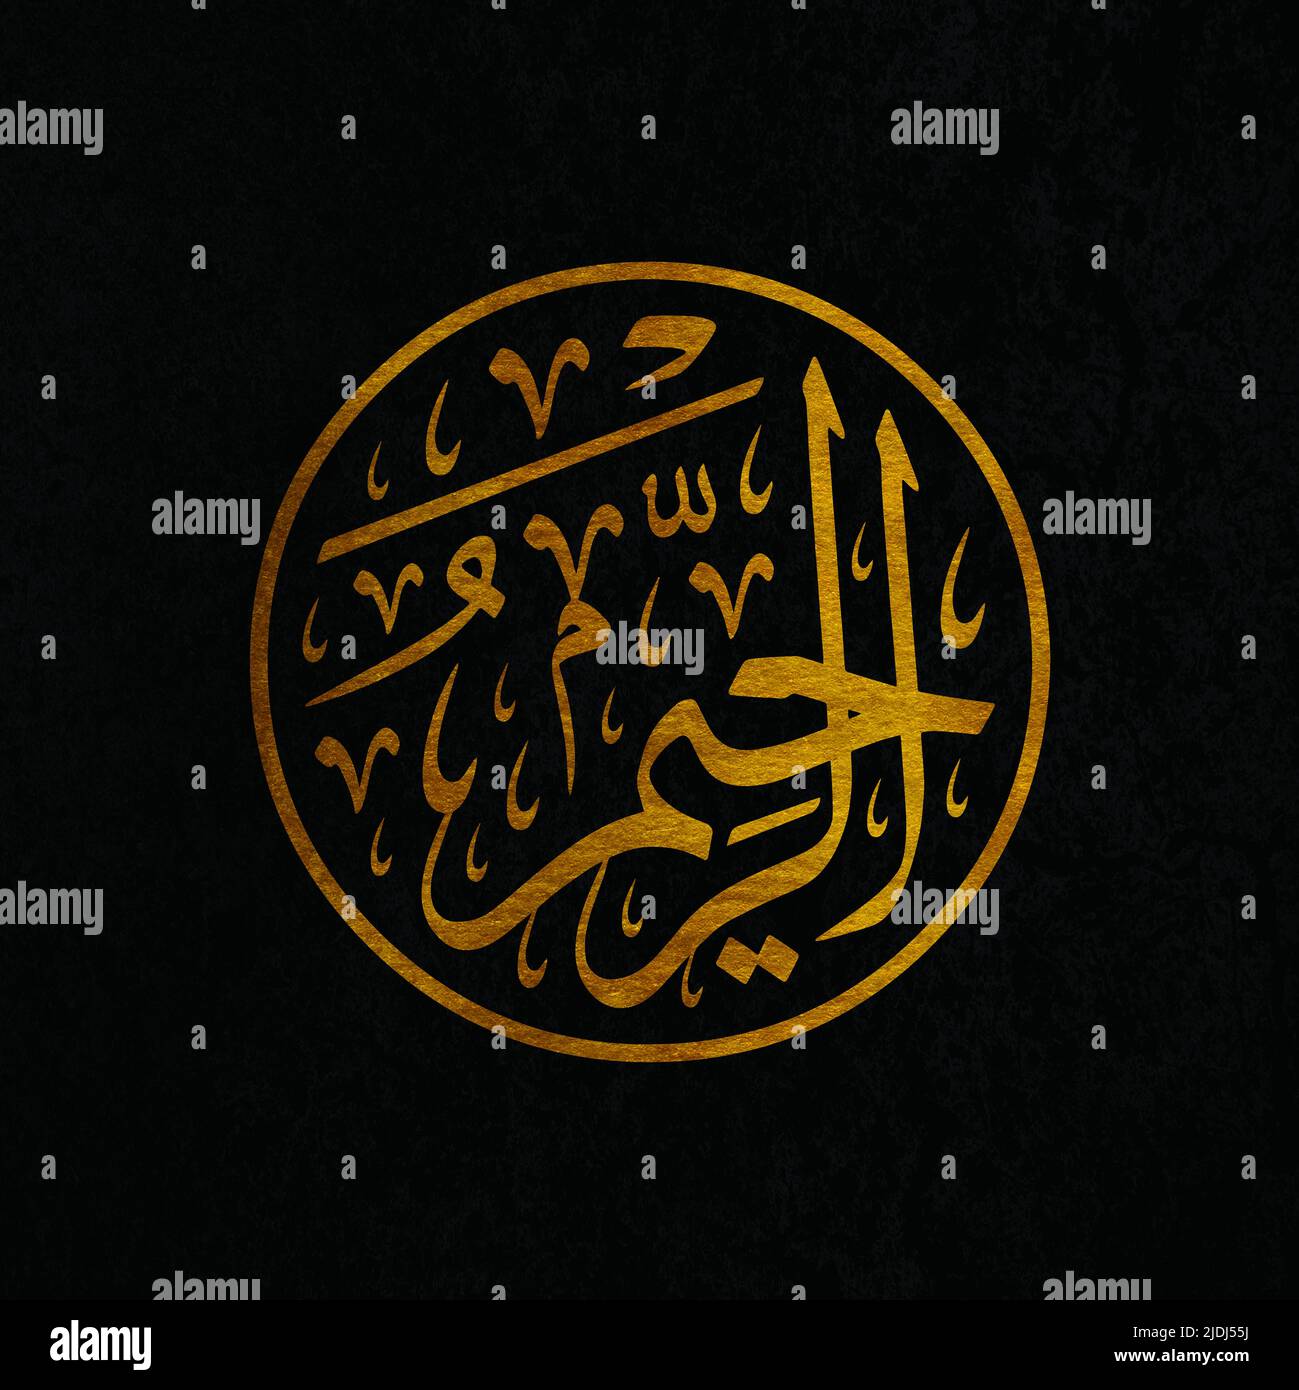 Ar Raheem Allah name Arabic Calligraphy Painting fro Home decor Stock Photo